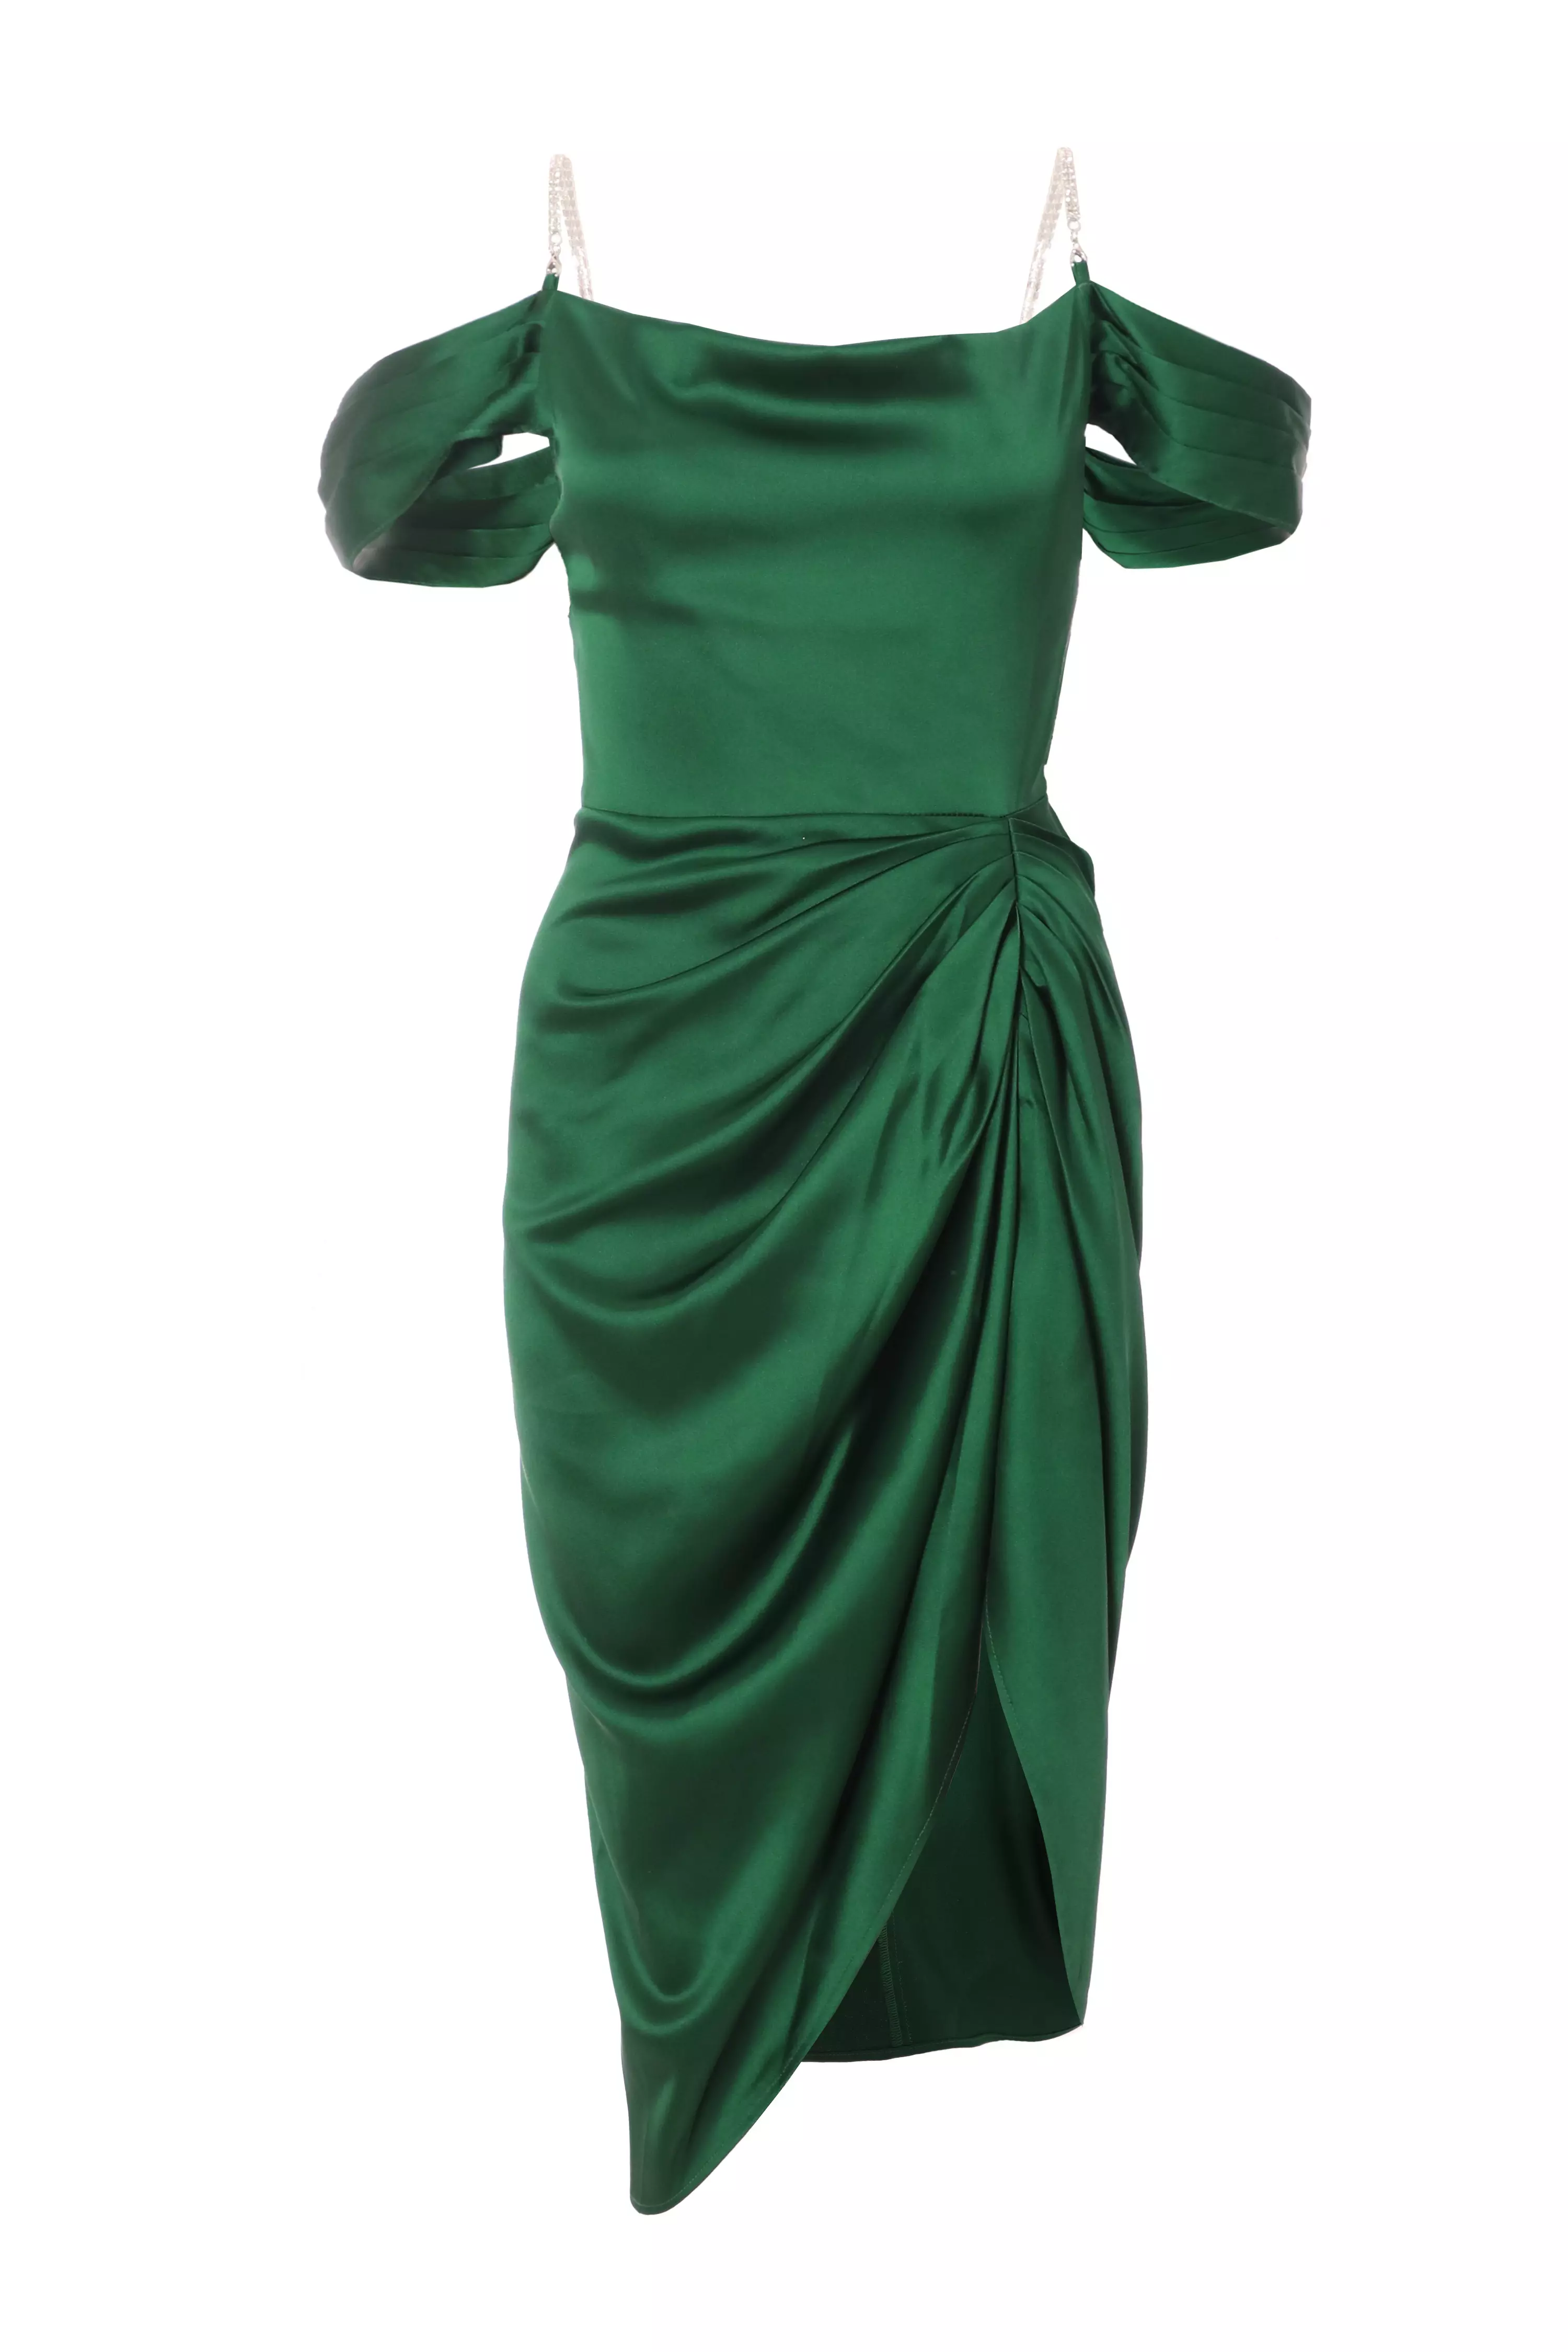 Petite Green Satin Ruched Cold Shoulder Midi Dress